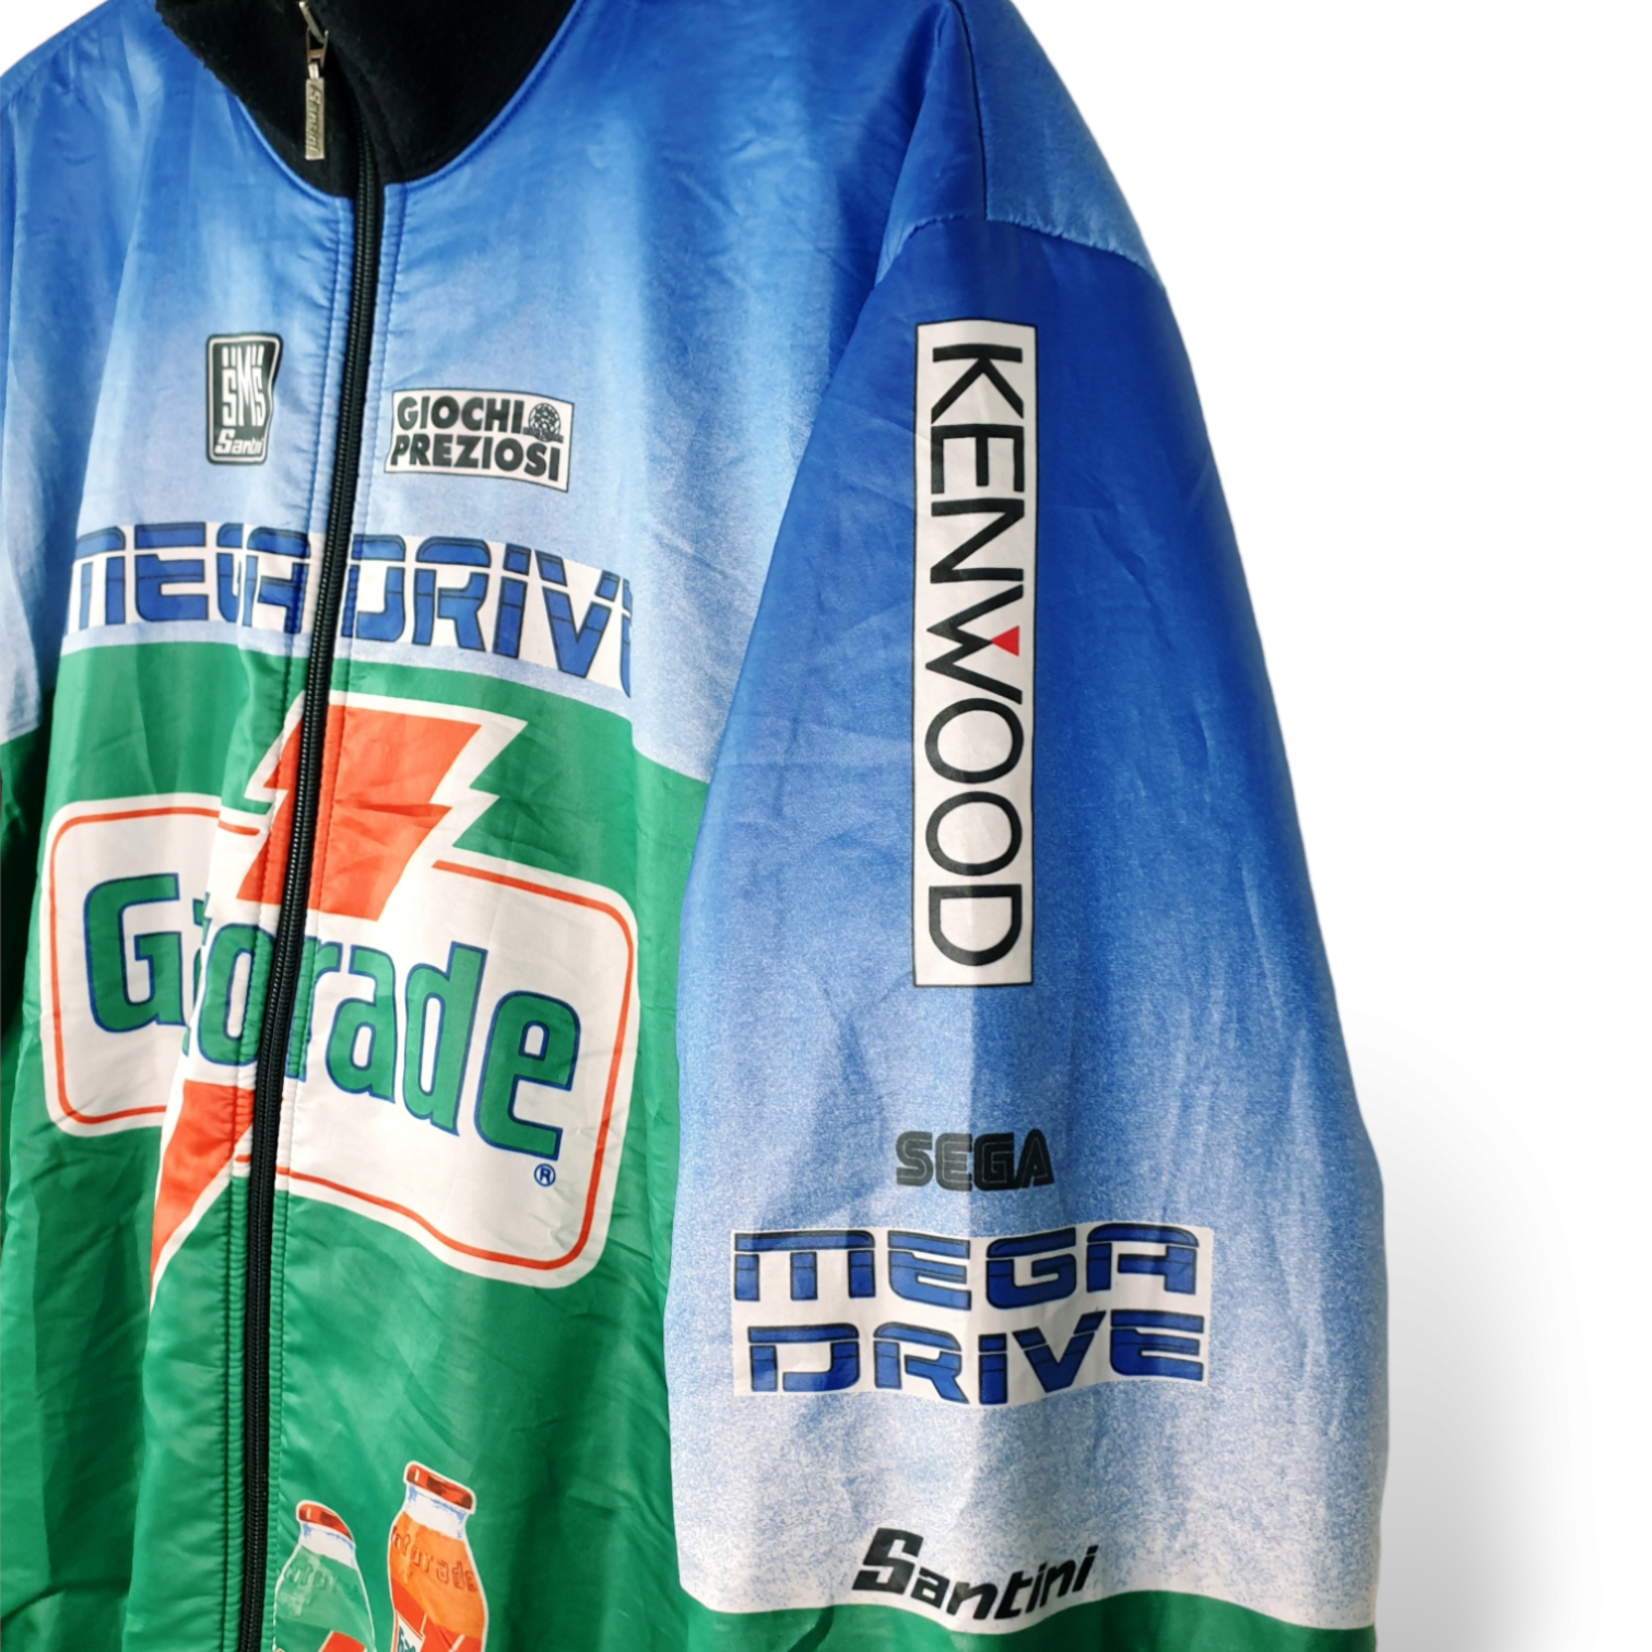 SMS Santini SMS Santini vintage cycling jacket Gatorade - Mega Drive - Kenwood 1993